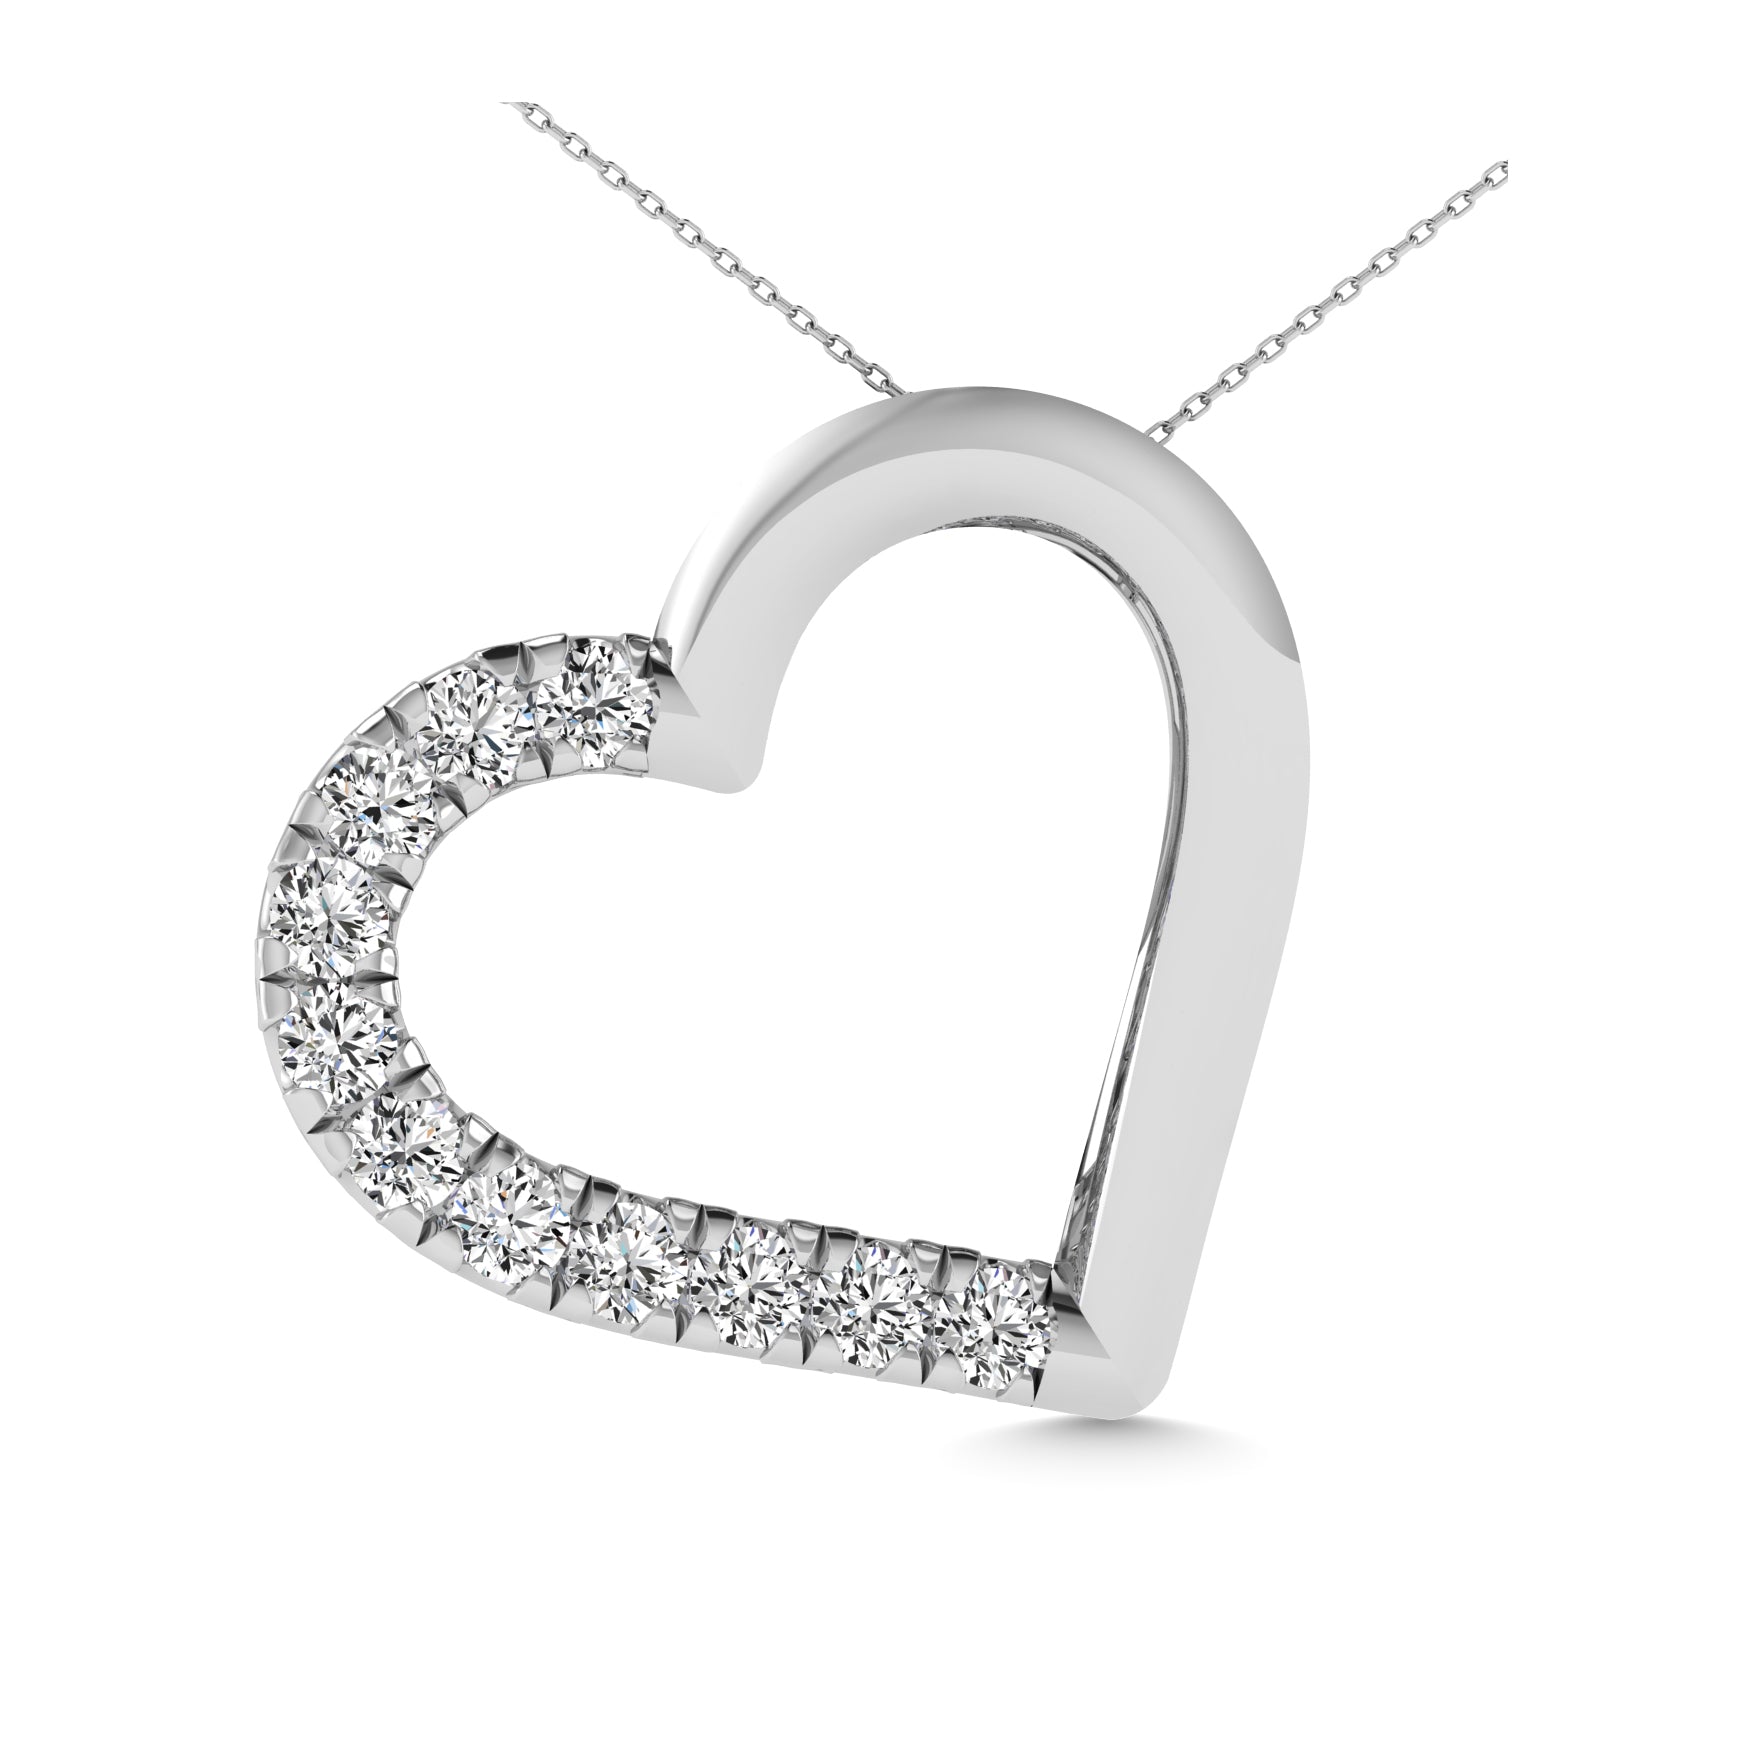 10K White Gold 1/10 Ctw Diamond Heart Pendant